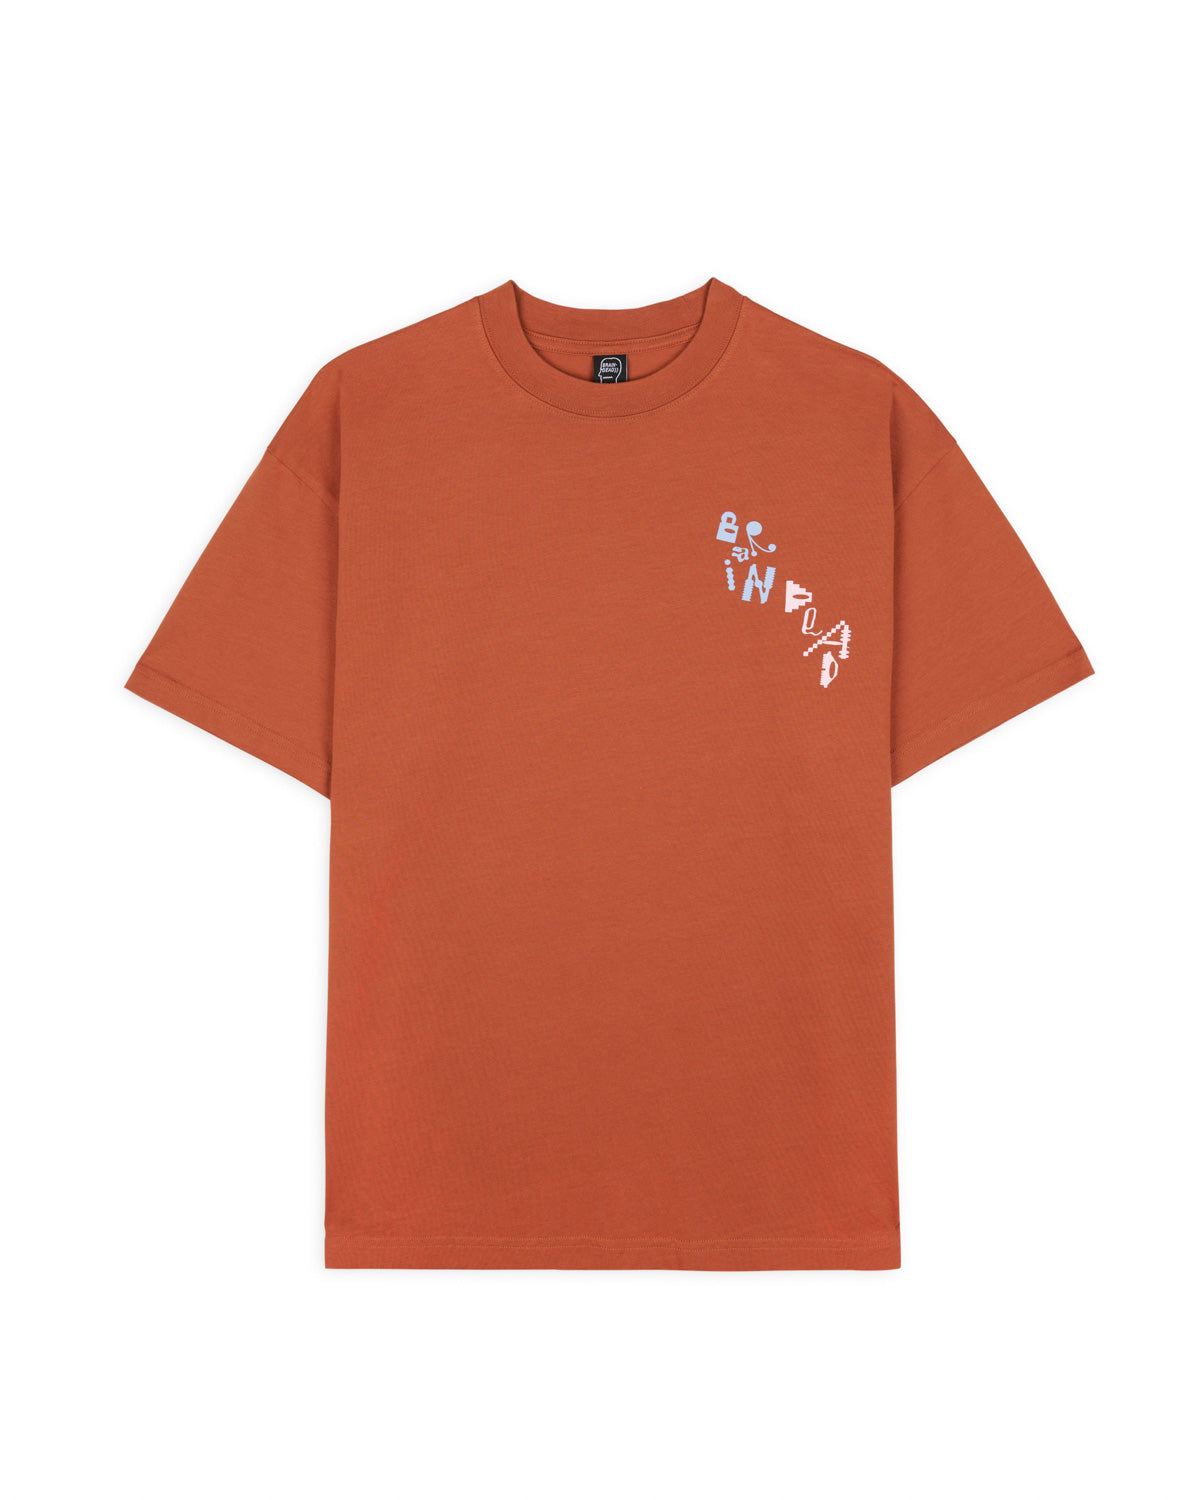 ET T-Shirt - Brown 1